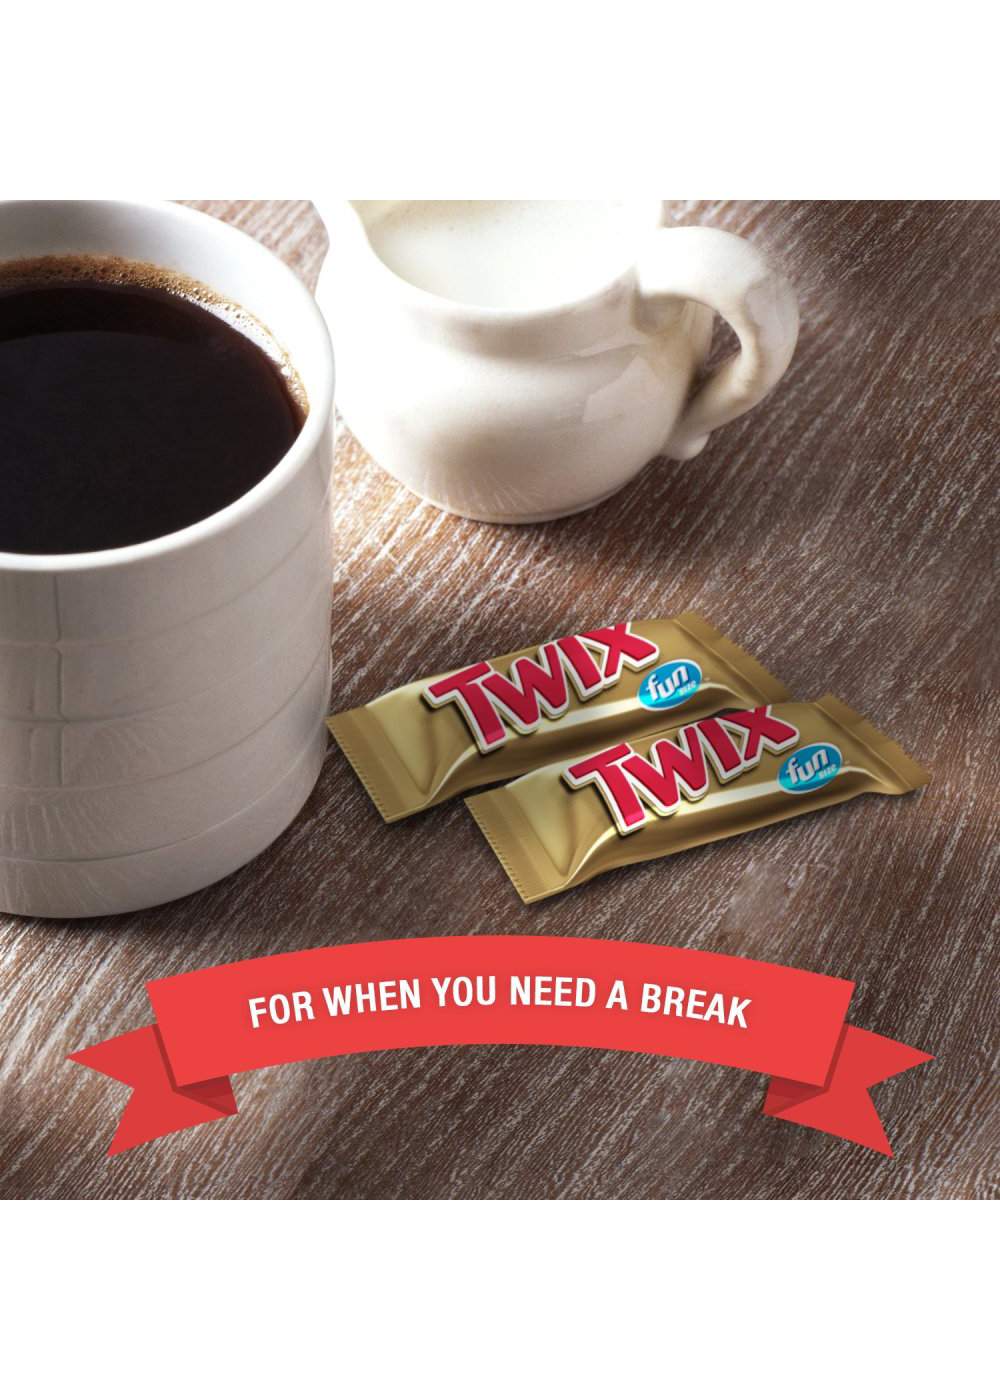 Twix Chocolate Fun Size Candy Bars; image 3 of 5